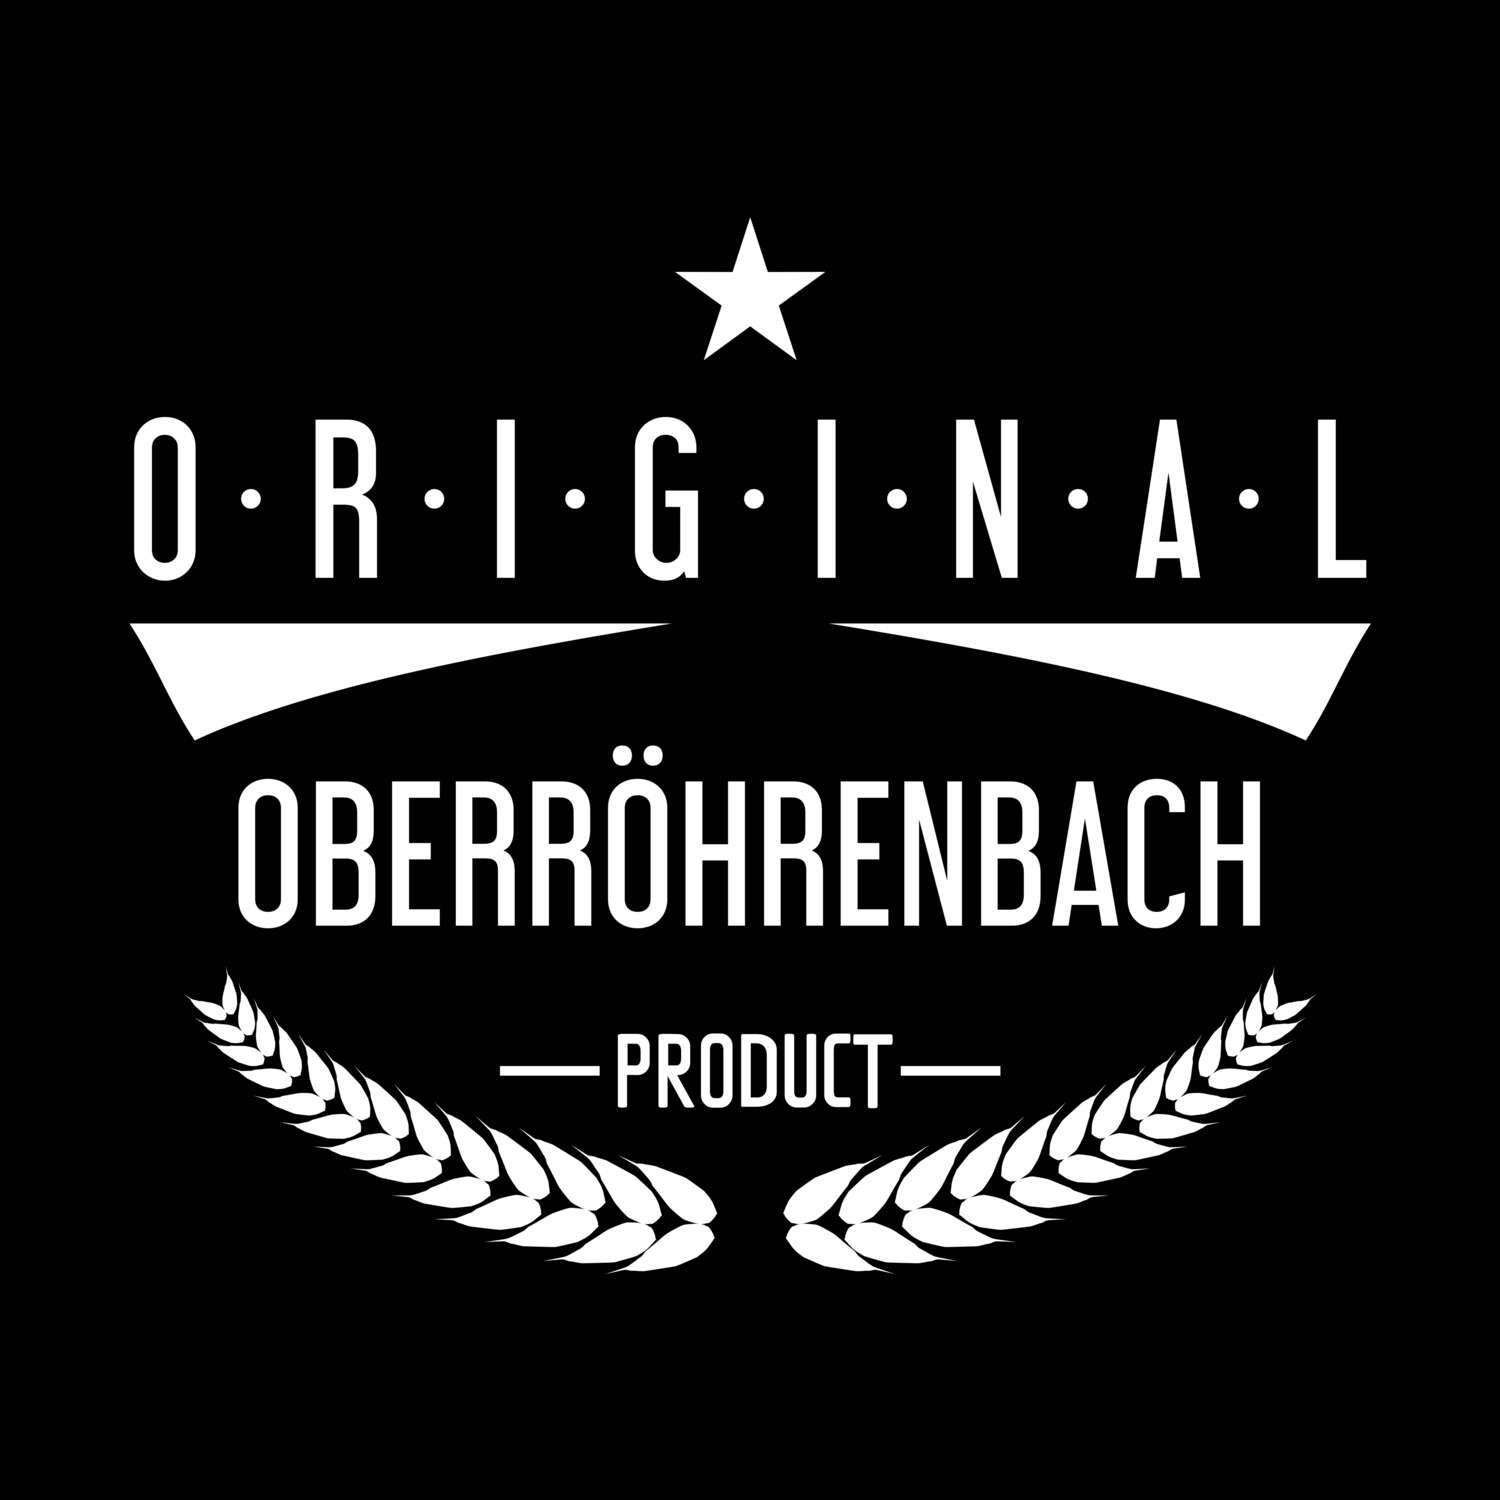 Oberröhrenbach T-Shirt »Original Product«